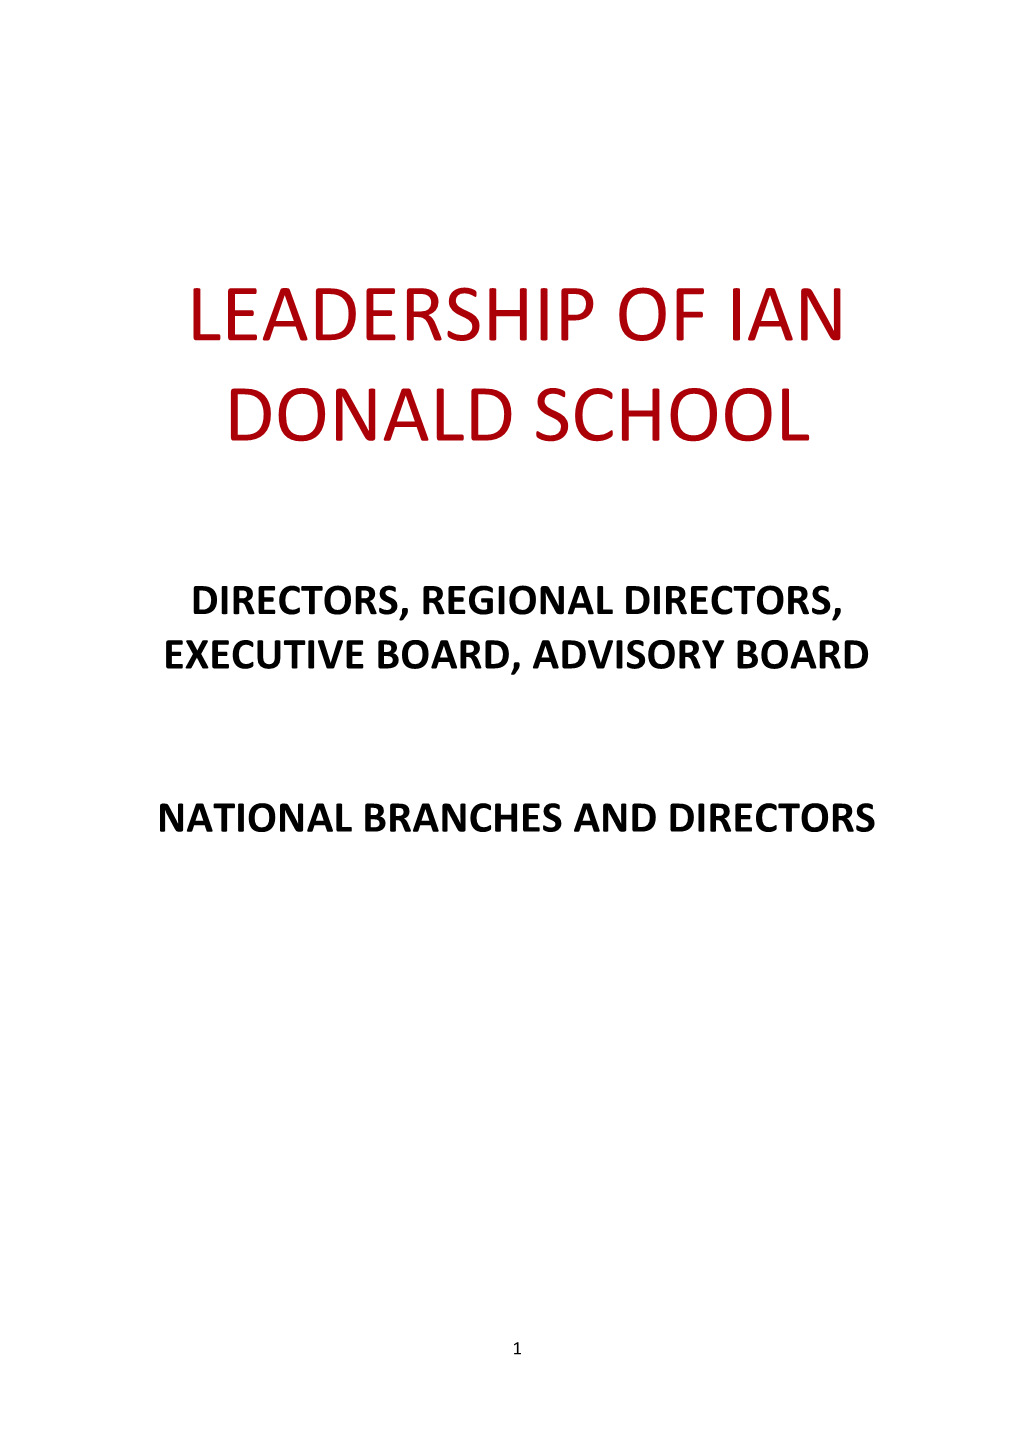 Leadership of Ian Donald School